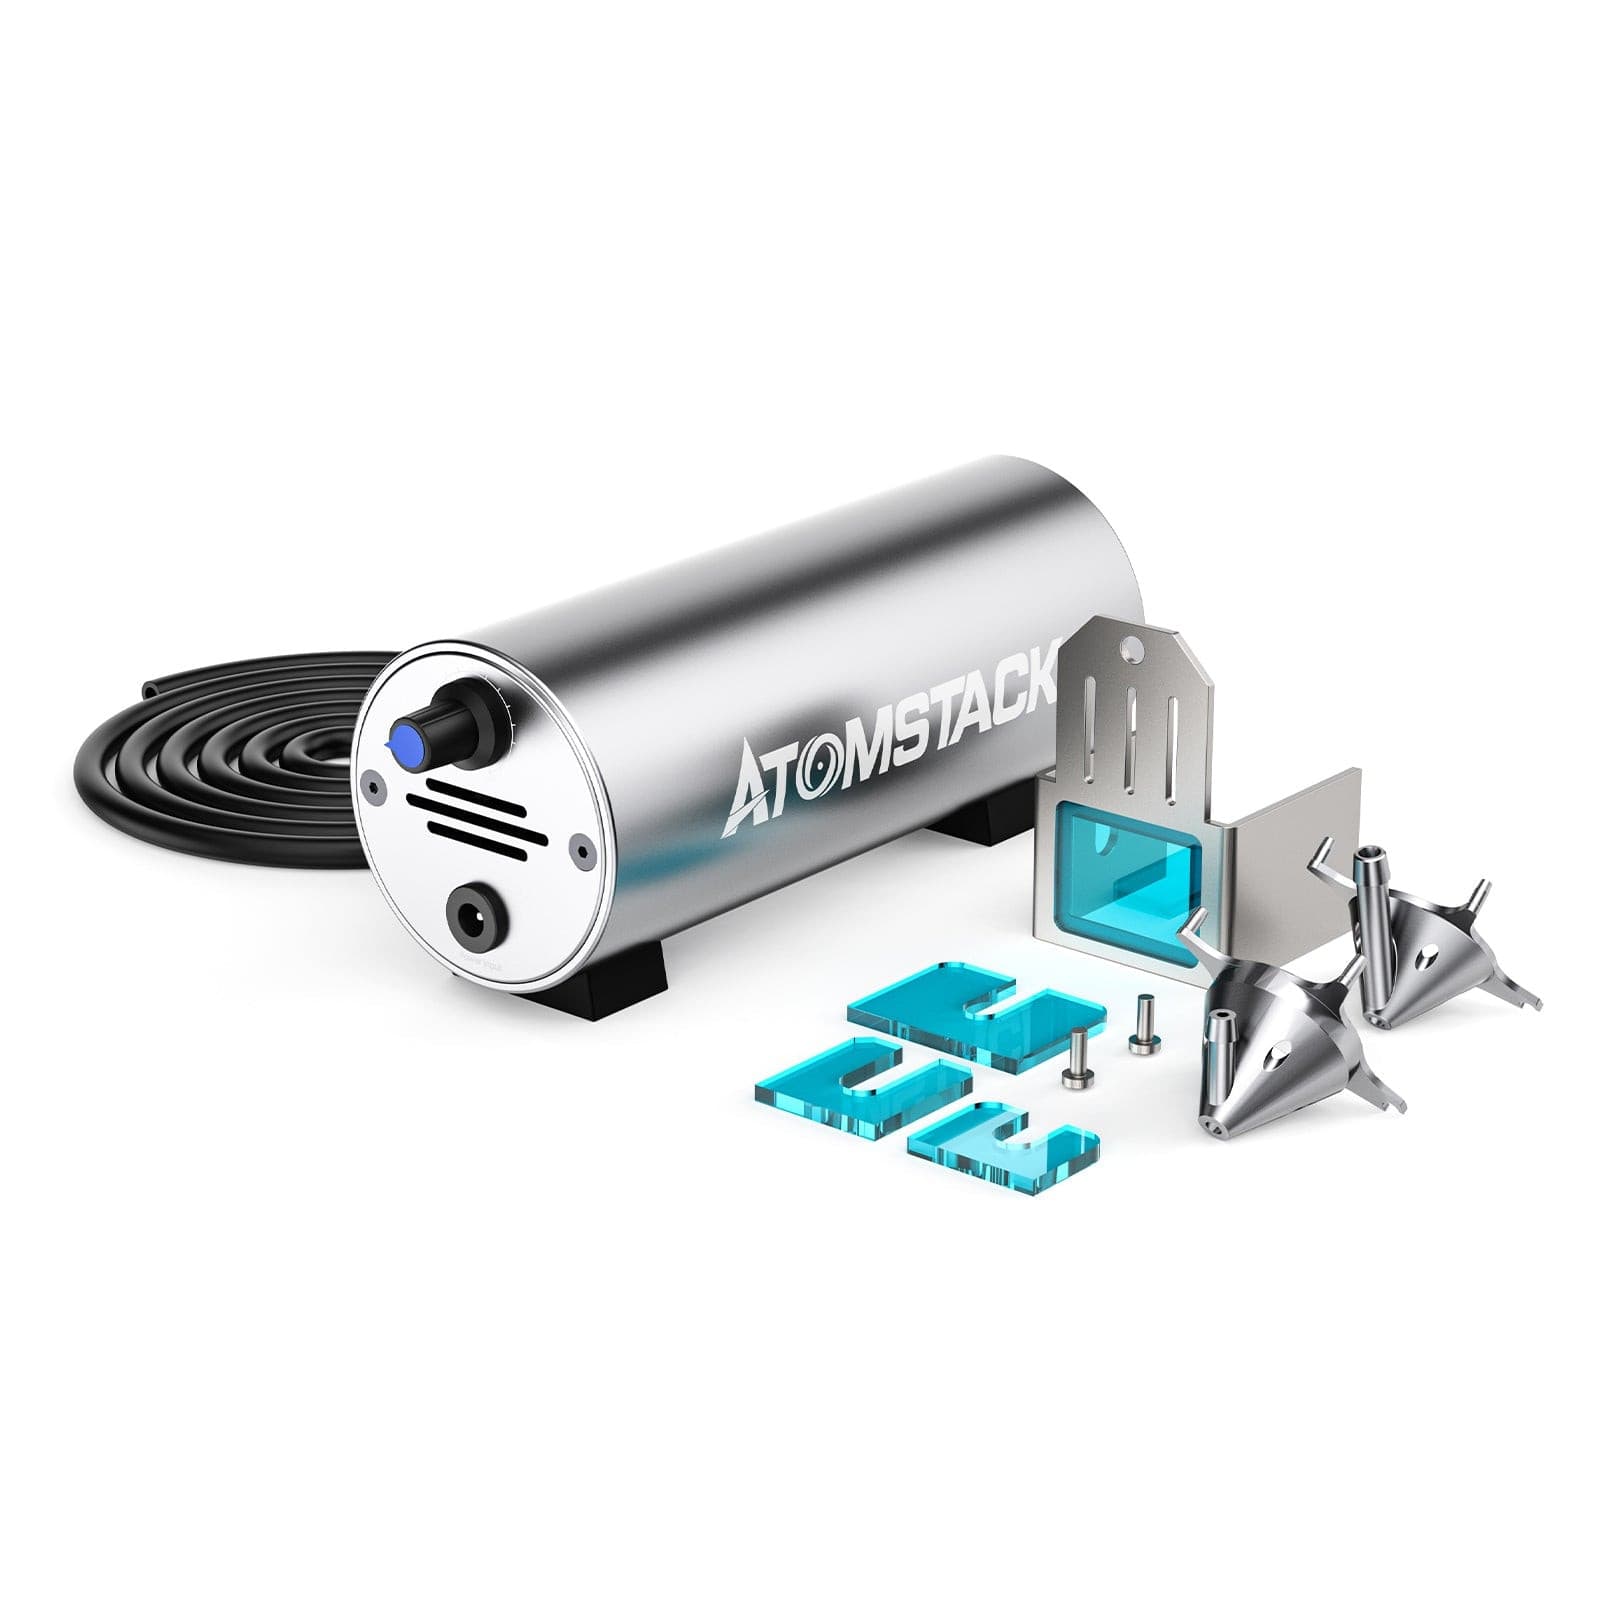 Atomstack X40 Pro 210W Professional Grade Laser Engraving and Cutting Machine, EU Plug